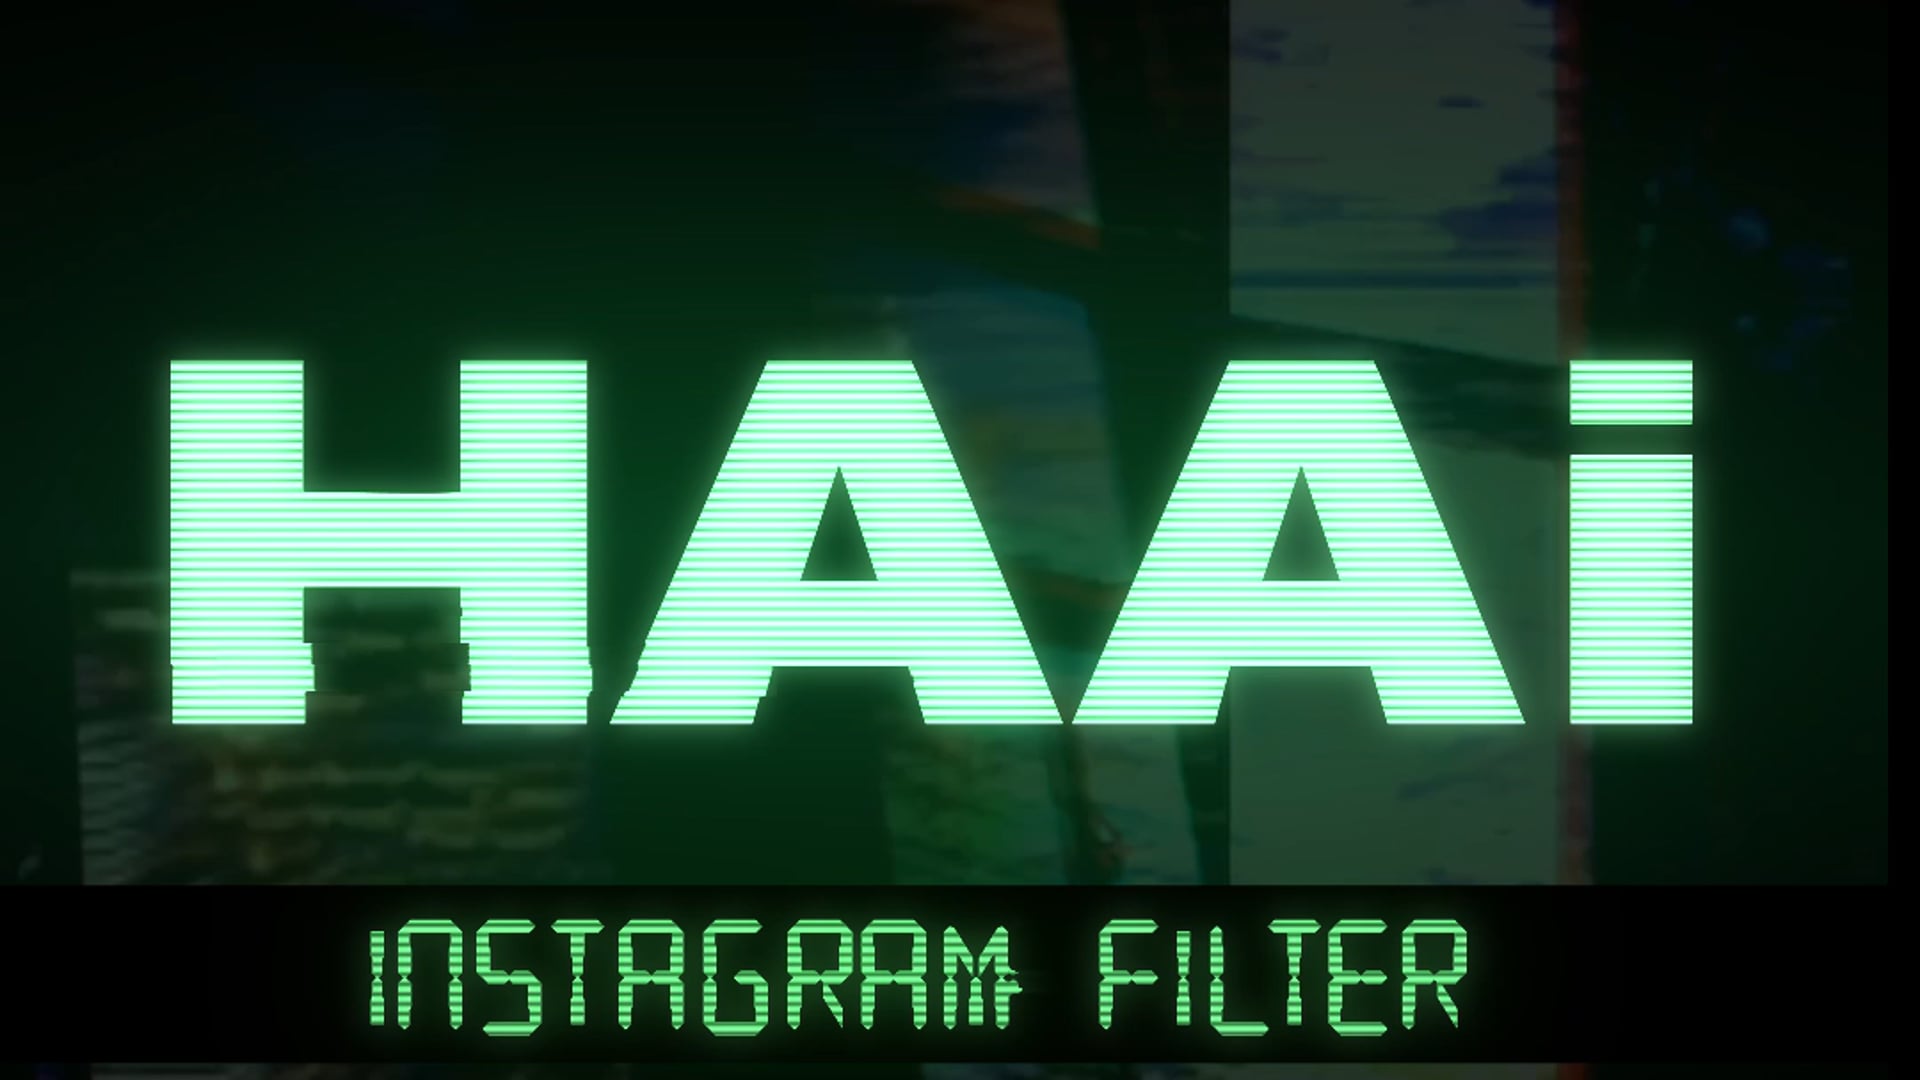 Instagram Filter promo for HAAi